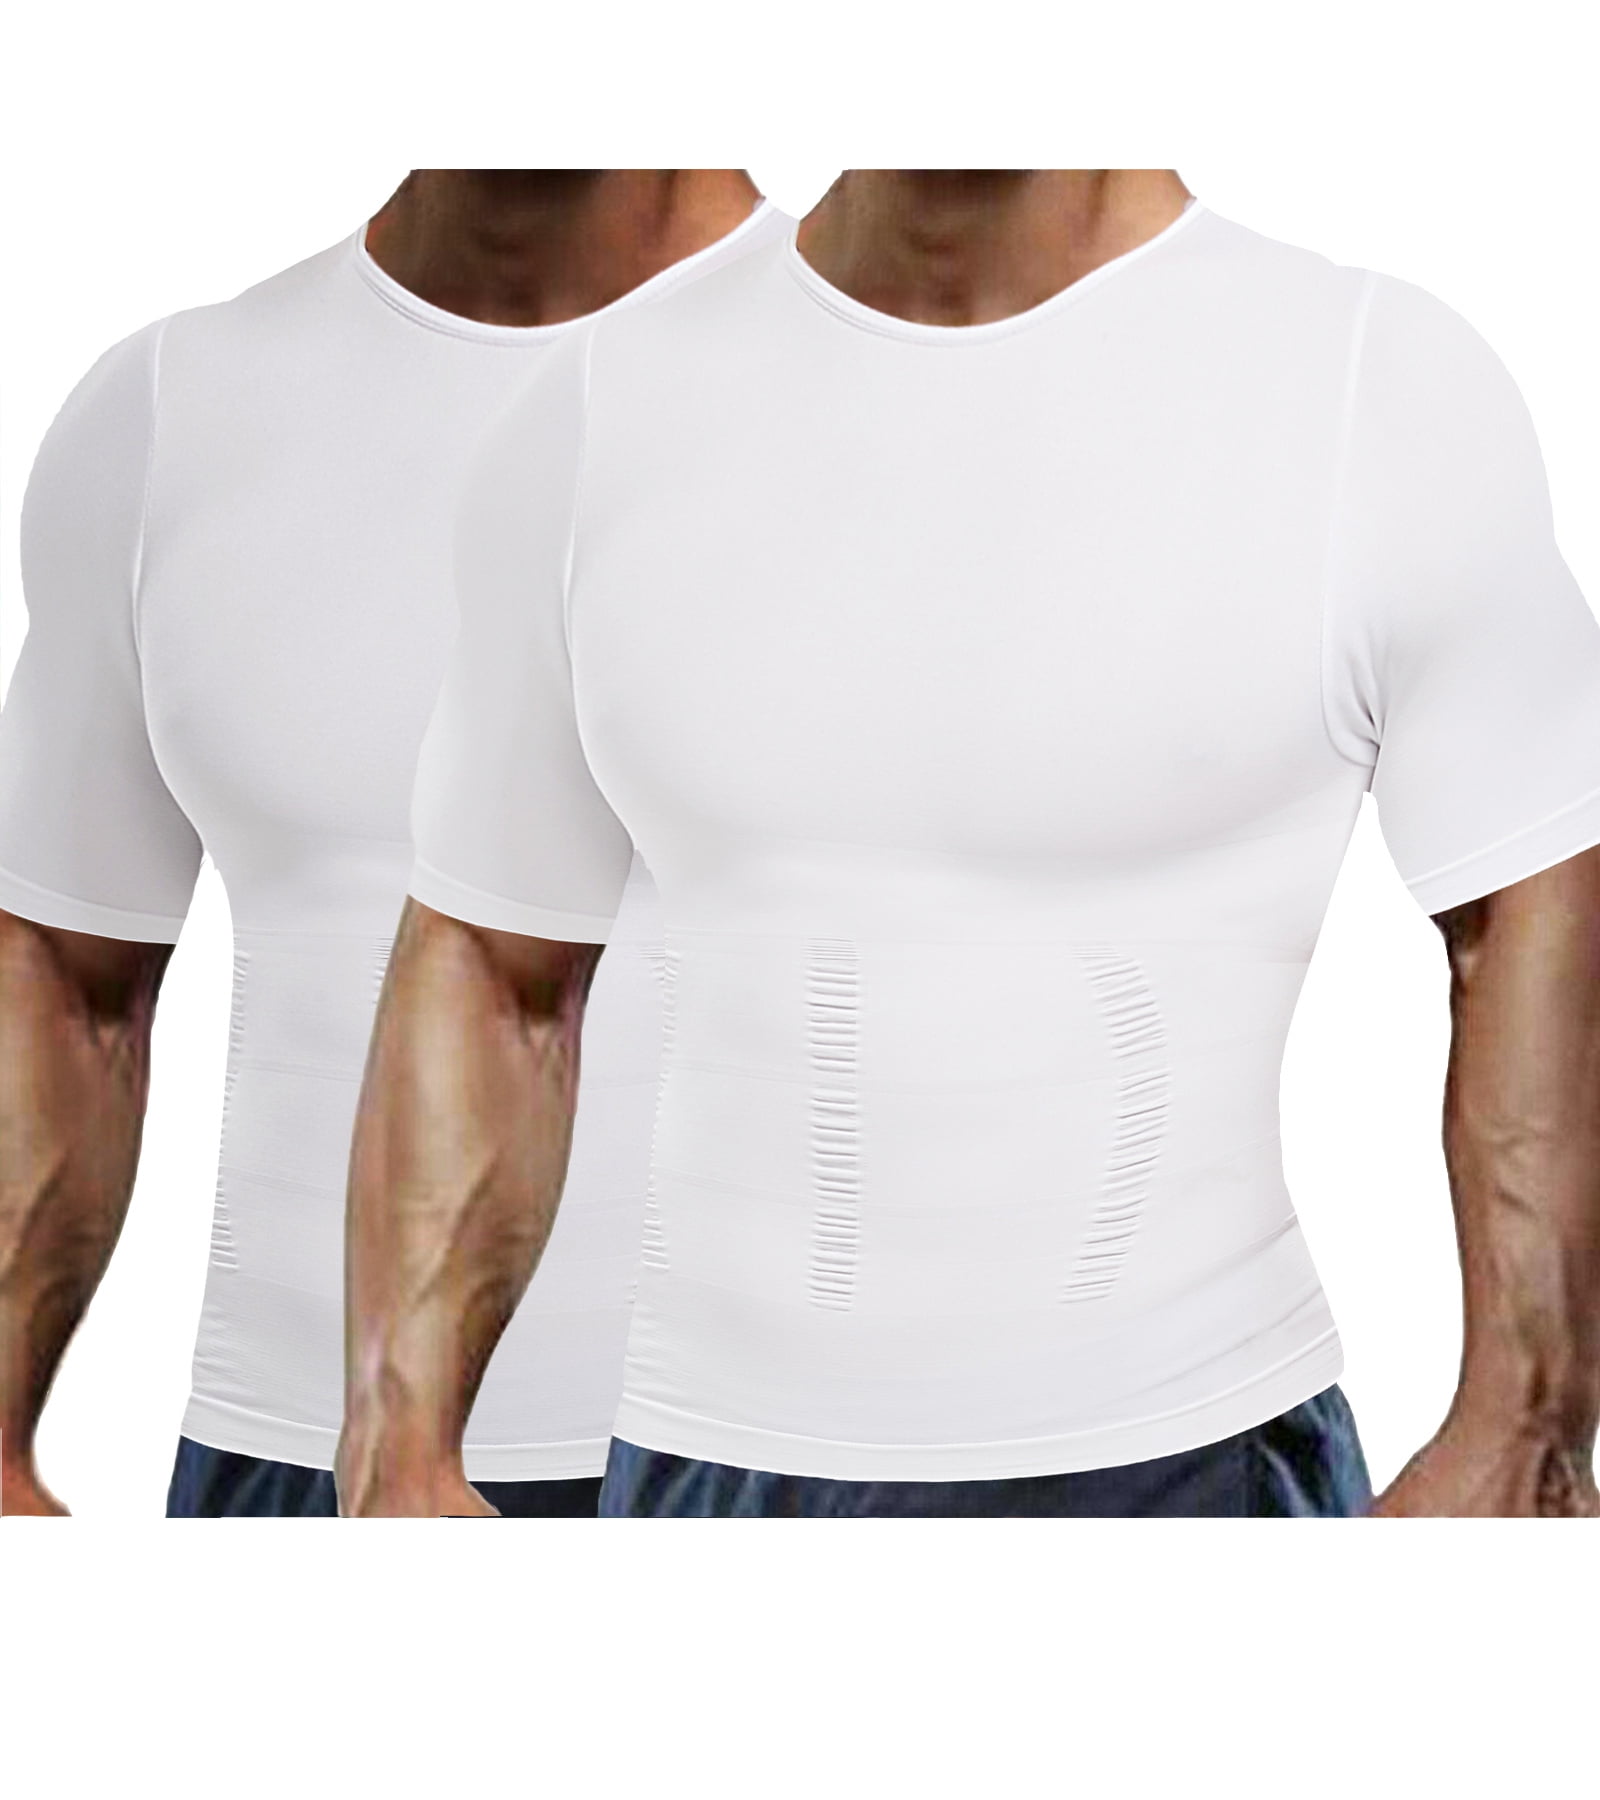 QRIC 2 Pack Men's Compression Shirt White Undershirt Slimming Tank Top ...